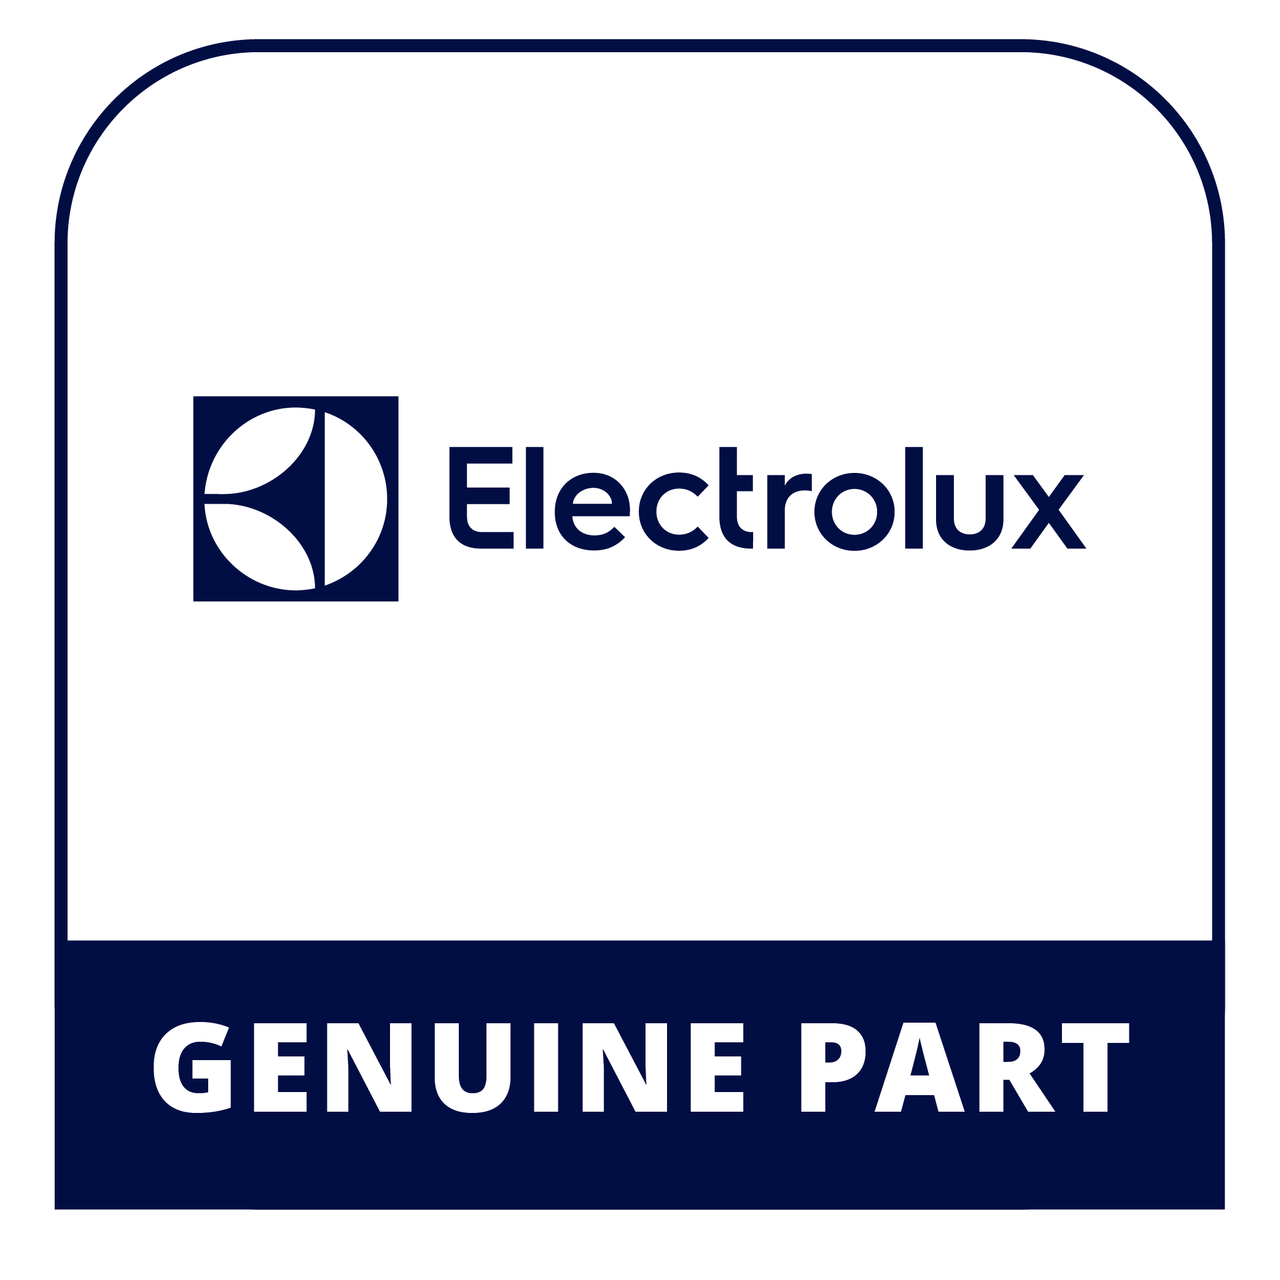 Frigidaire - Electrolux 5304501922 Bracket - Genuine Electrolux Part